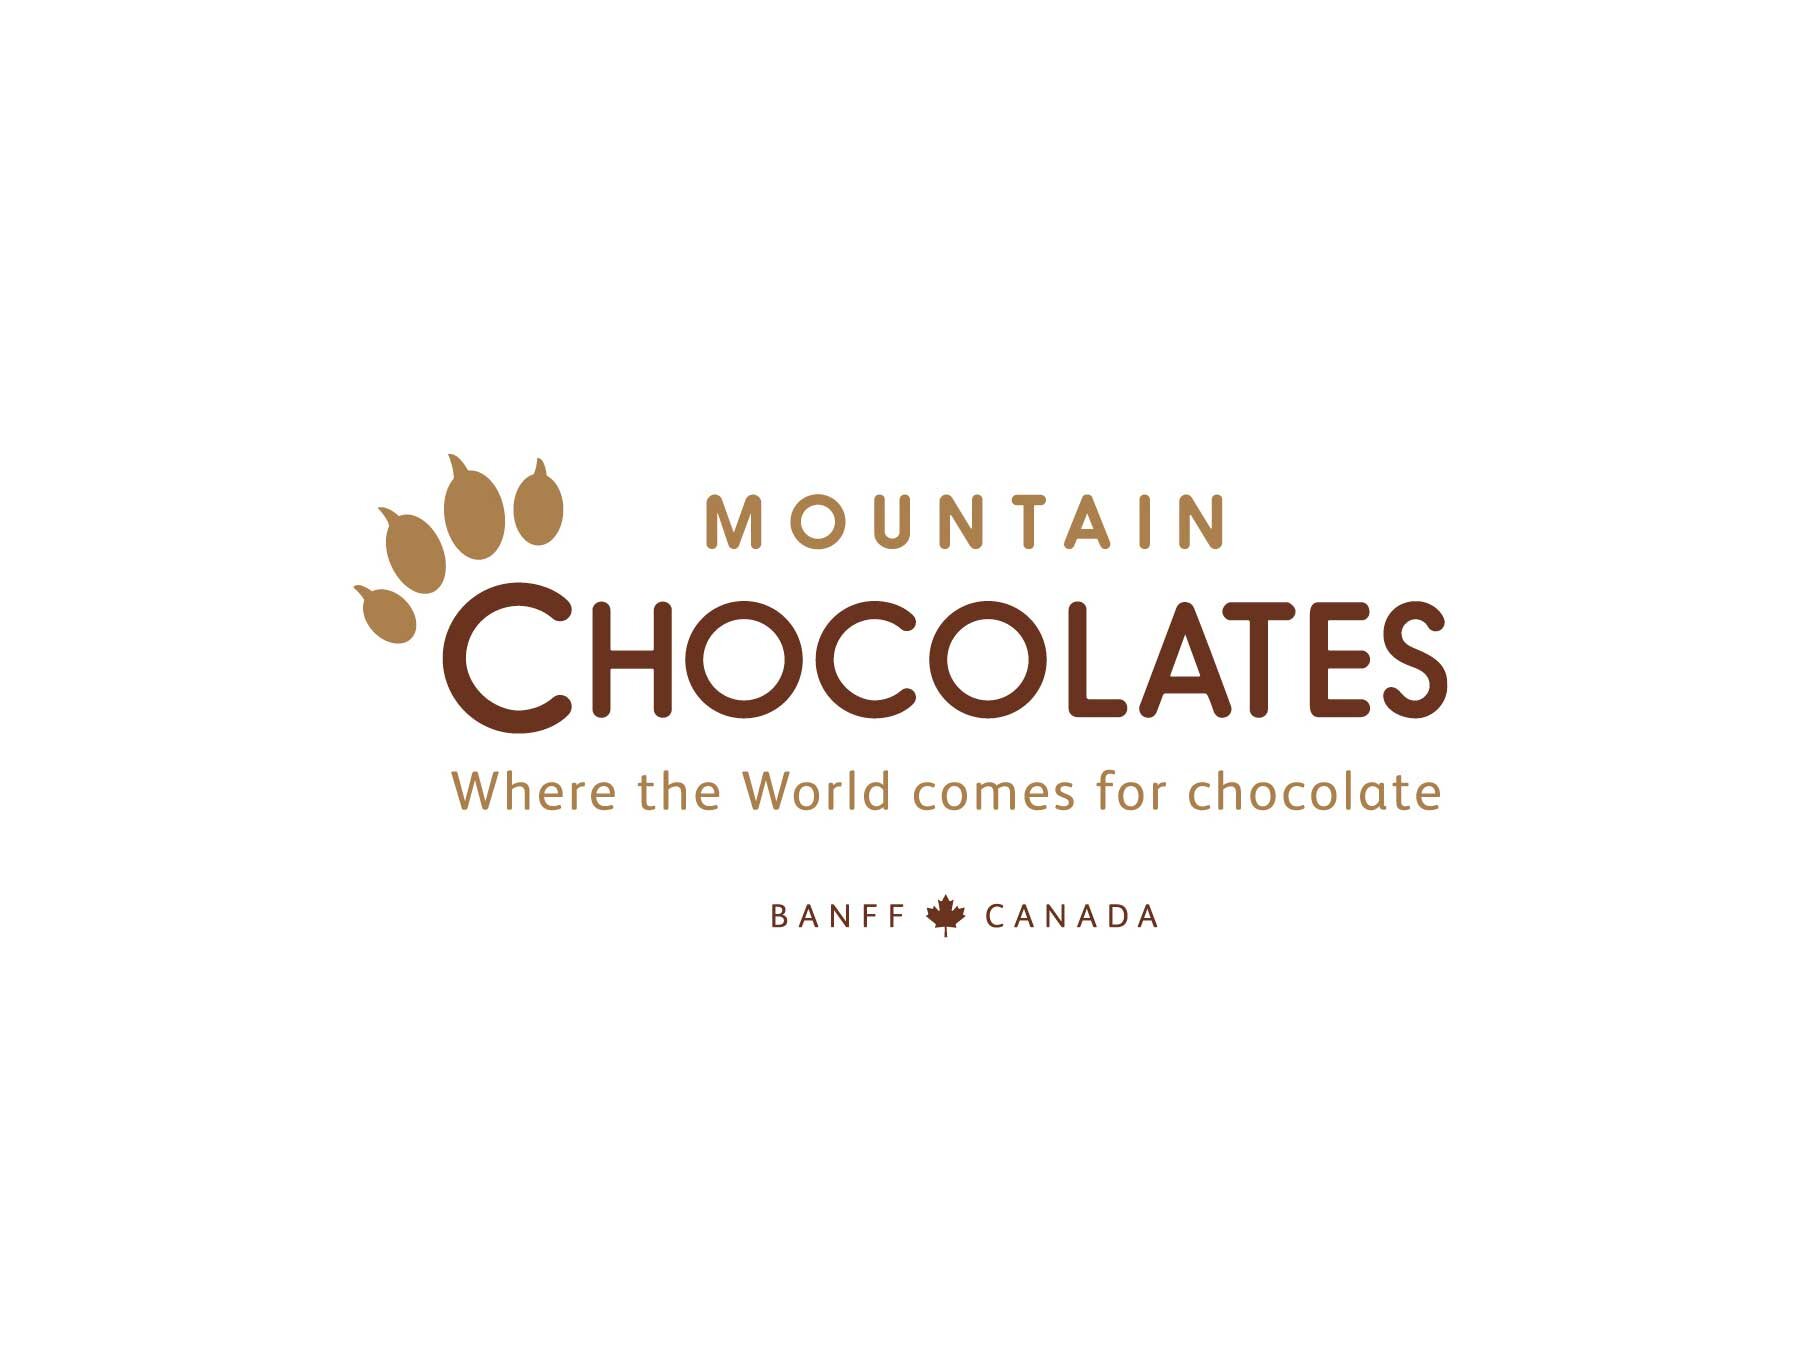 Mountain Chocolates logo (Copy)